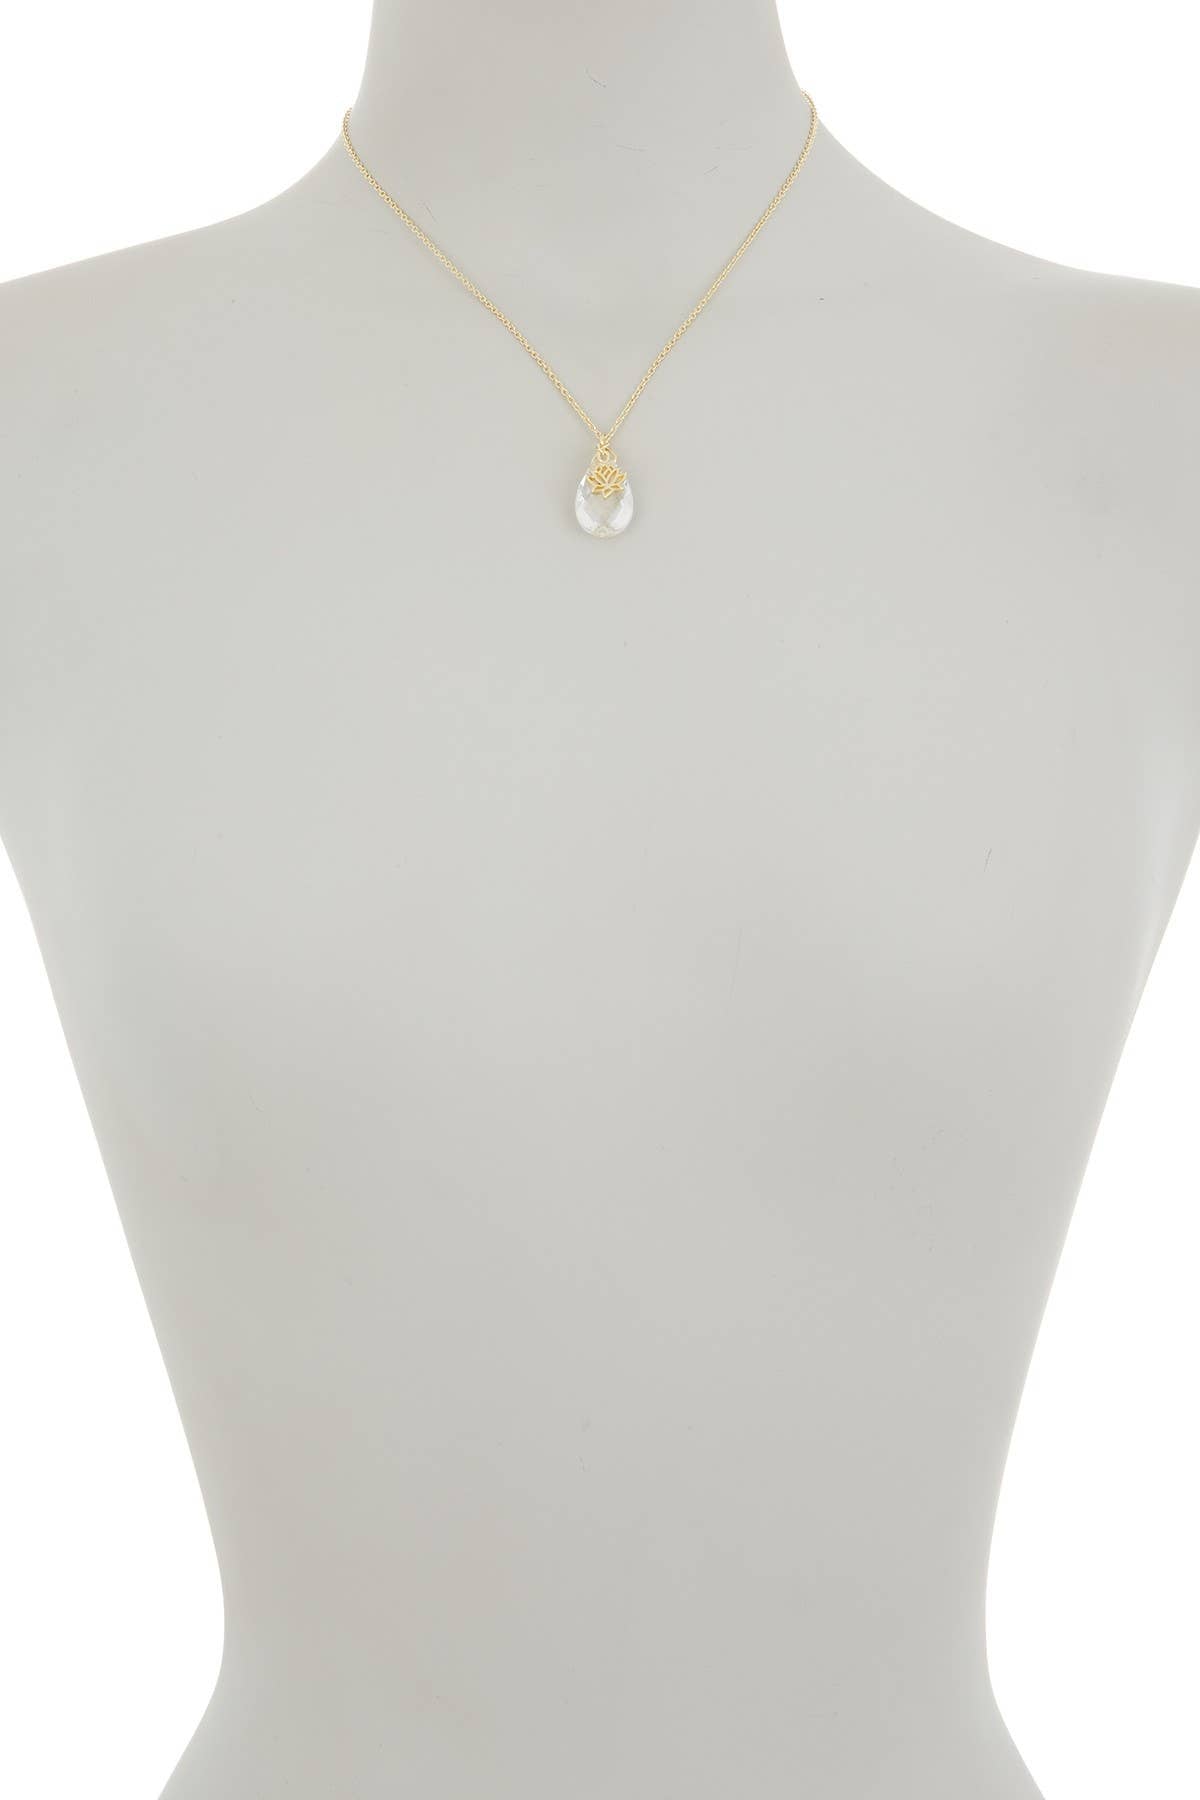 Sterling Silver & Crystal Quartz Lotus Necklace - VM